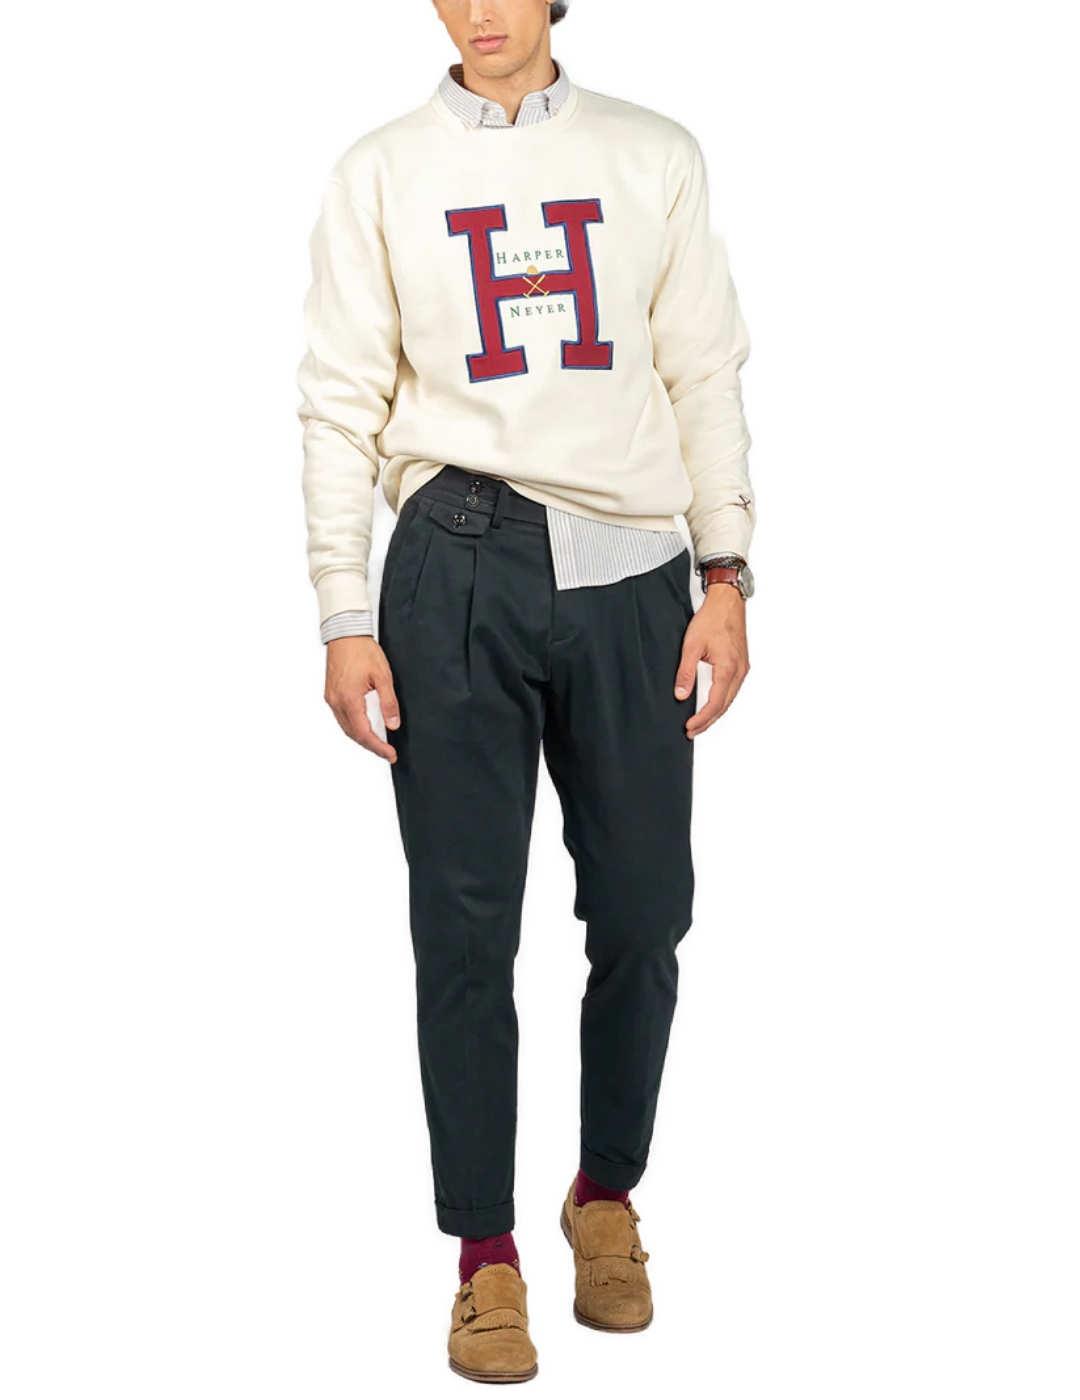 Sudadera Harper Harvard crudo 'H' bordada para hombre